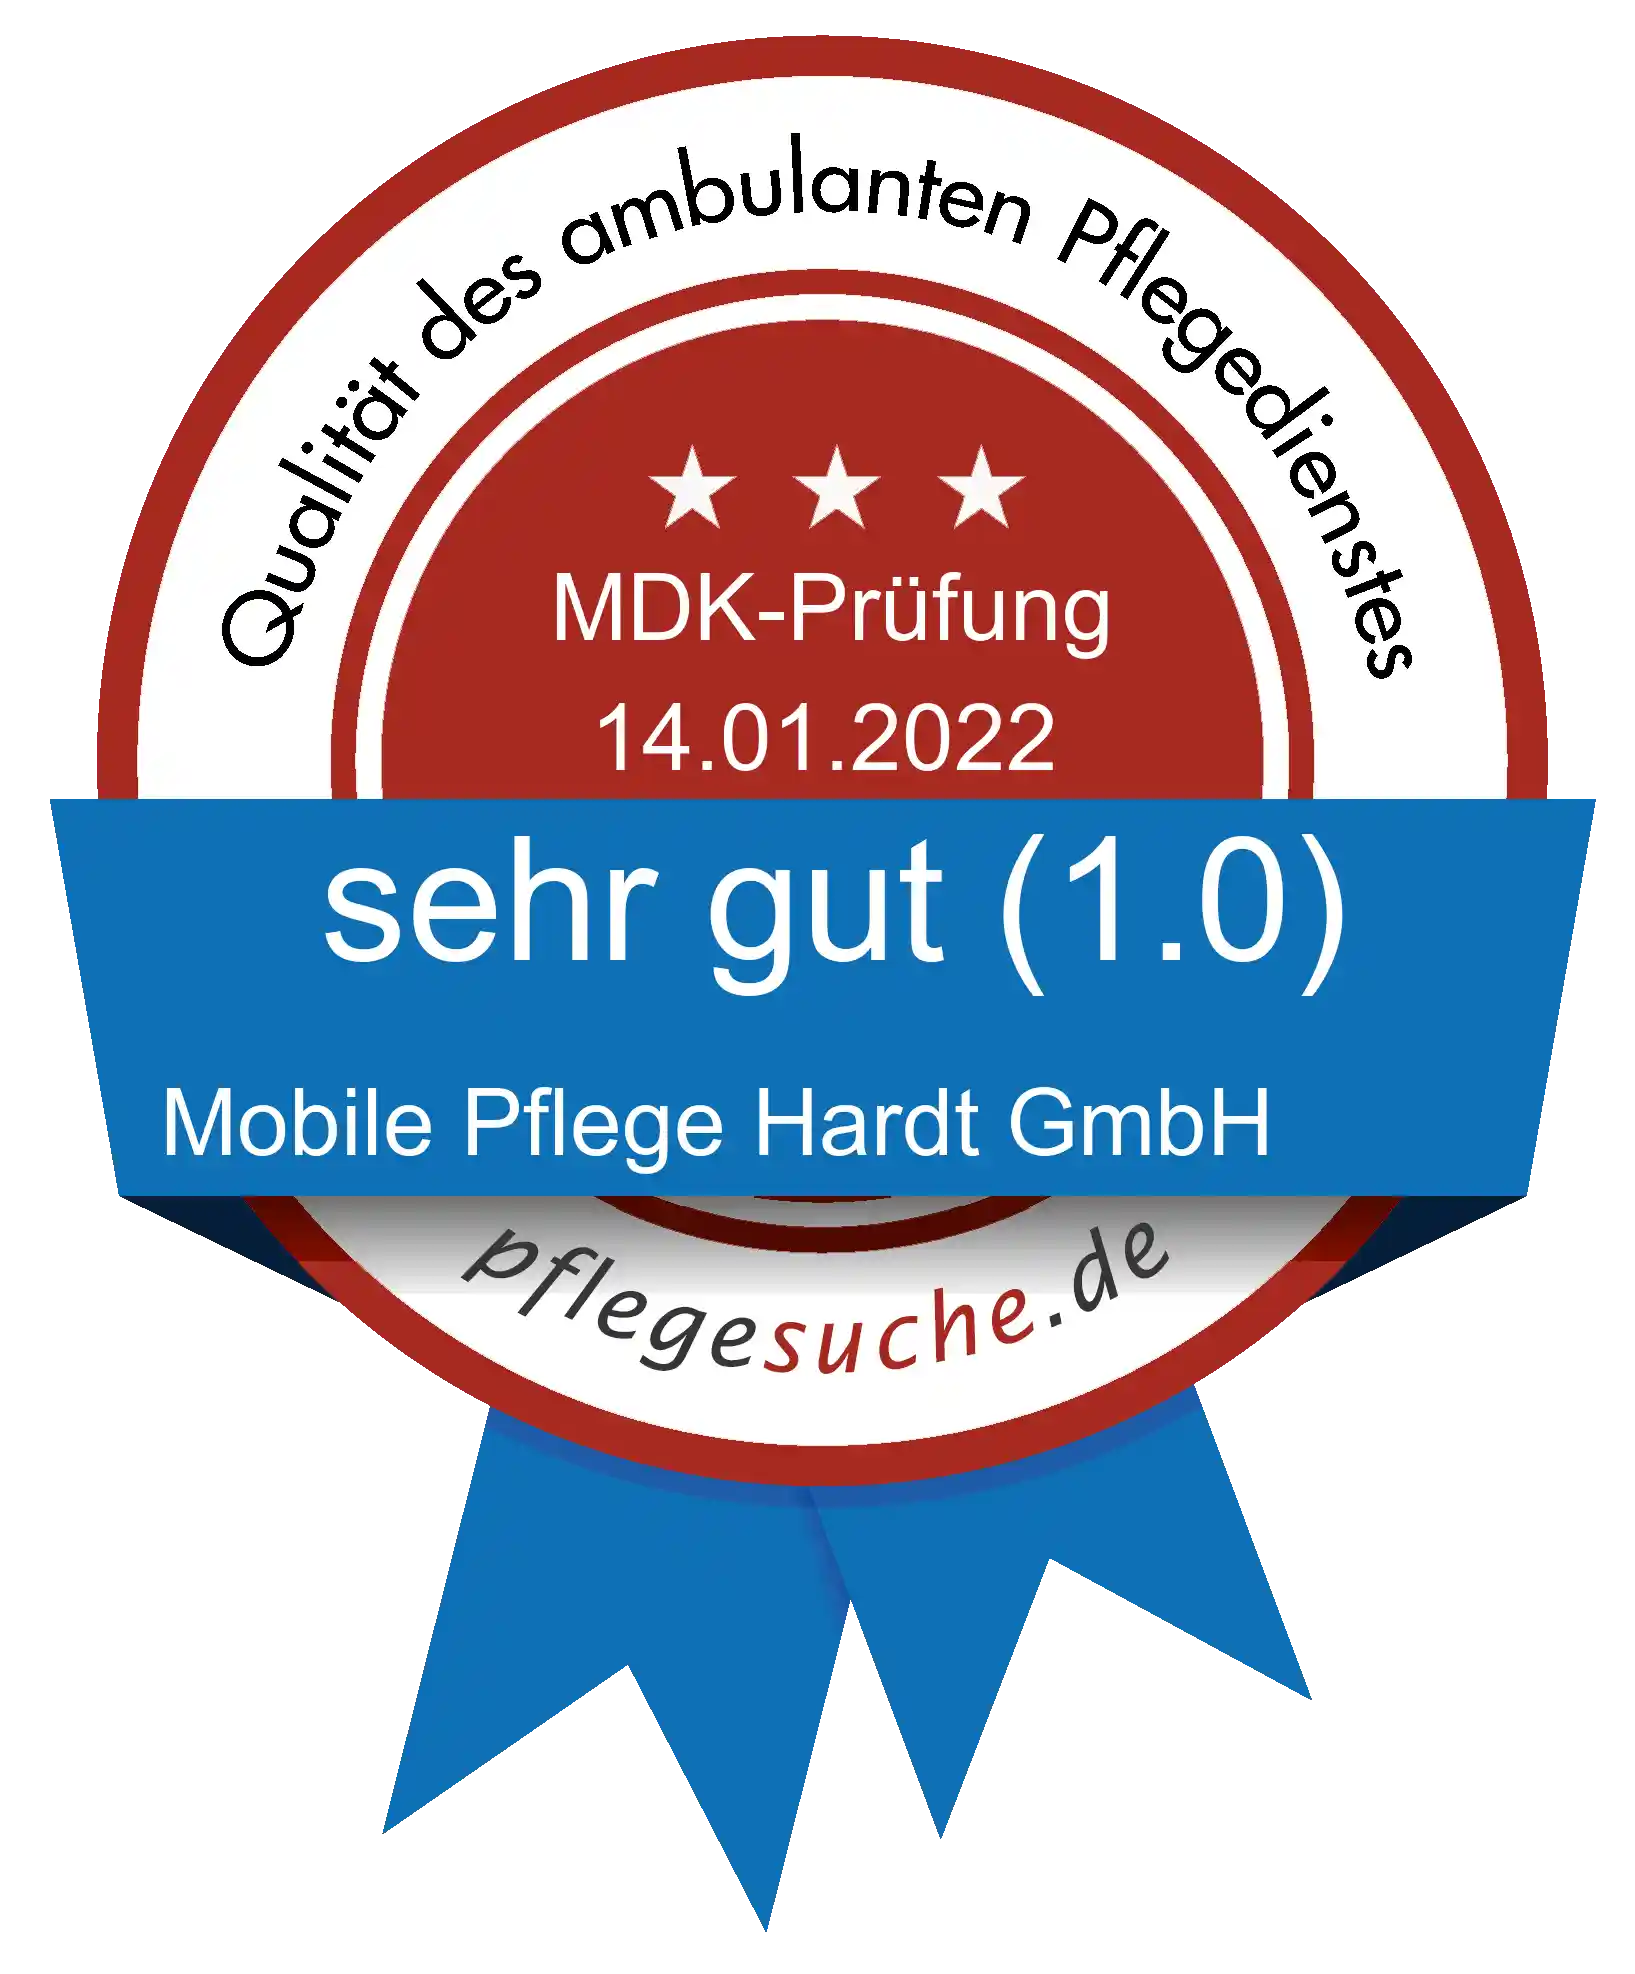 Siegel Benotung: Mobile Pflege Hardt GmbH